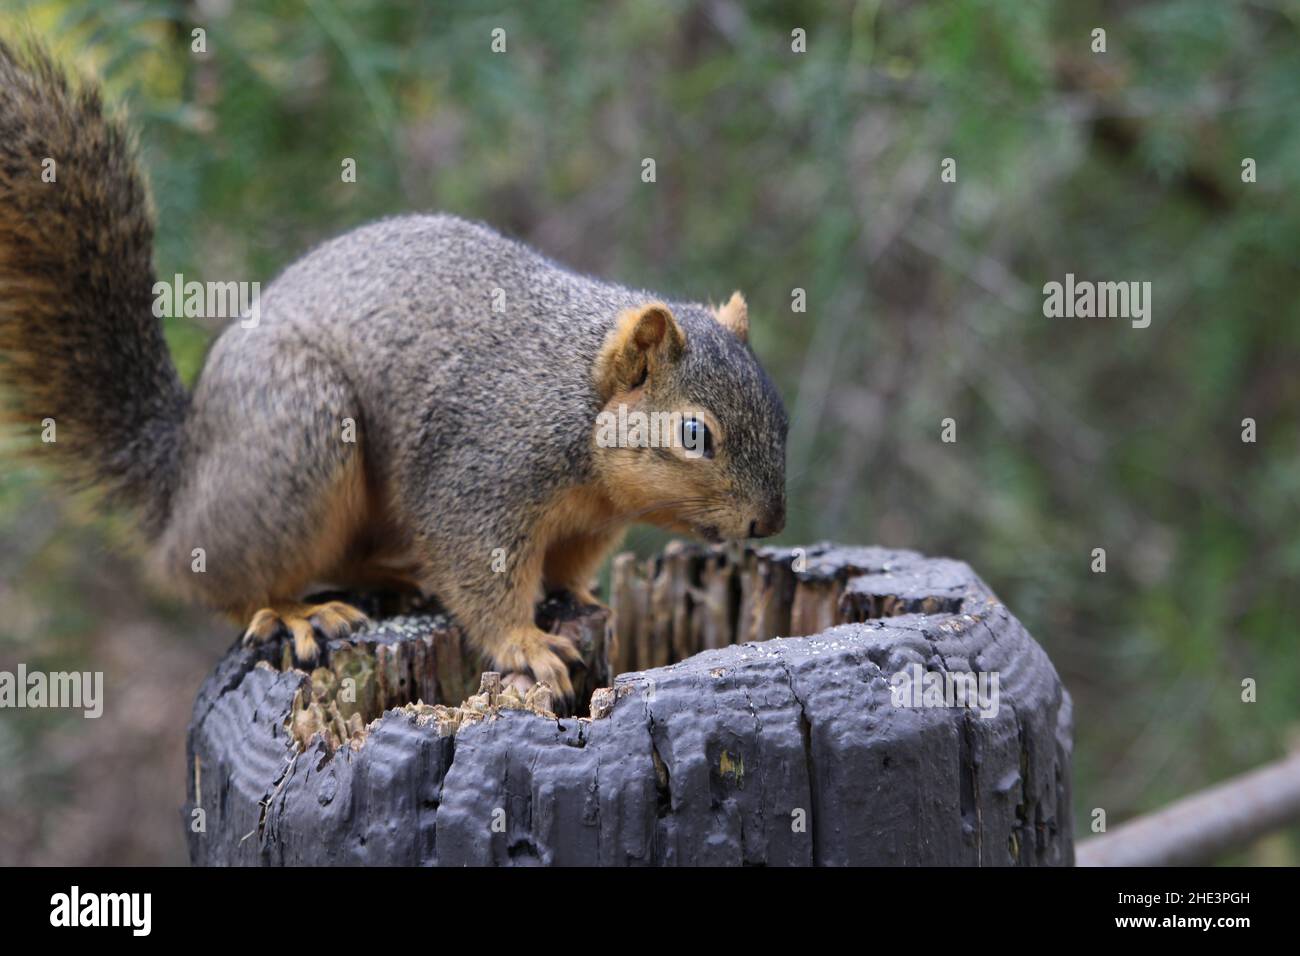 Overweight Squirrel in La Habra community park Stock Photo